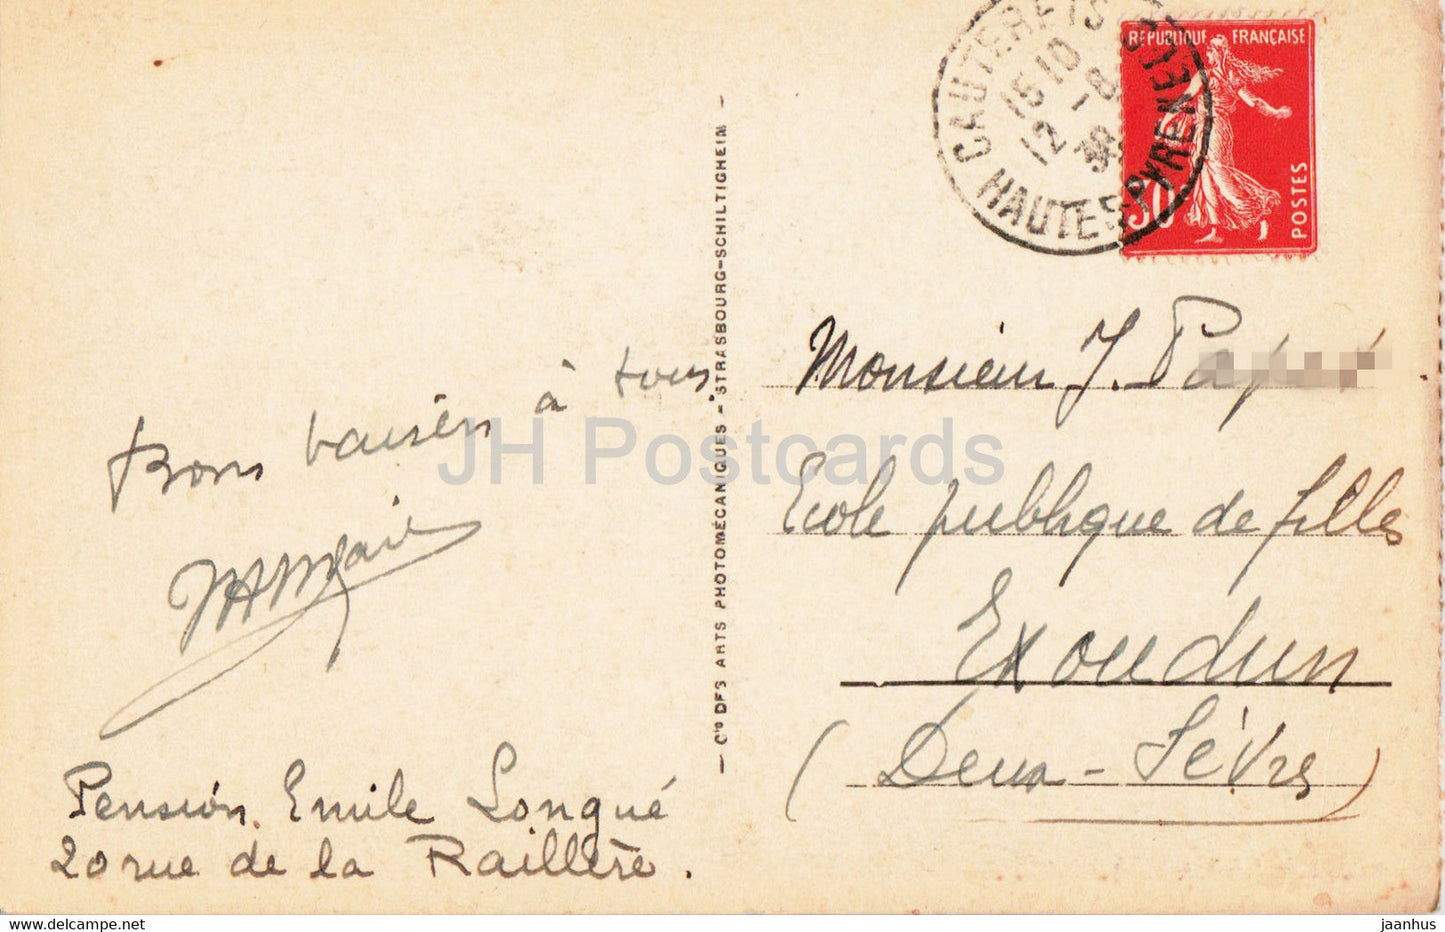 Cauterets - Valle de Lutour - 103 - alte Postkarte - 1938 - Frankreich - gebraucht